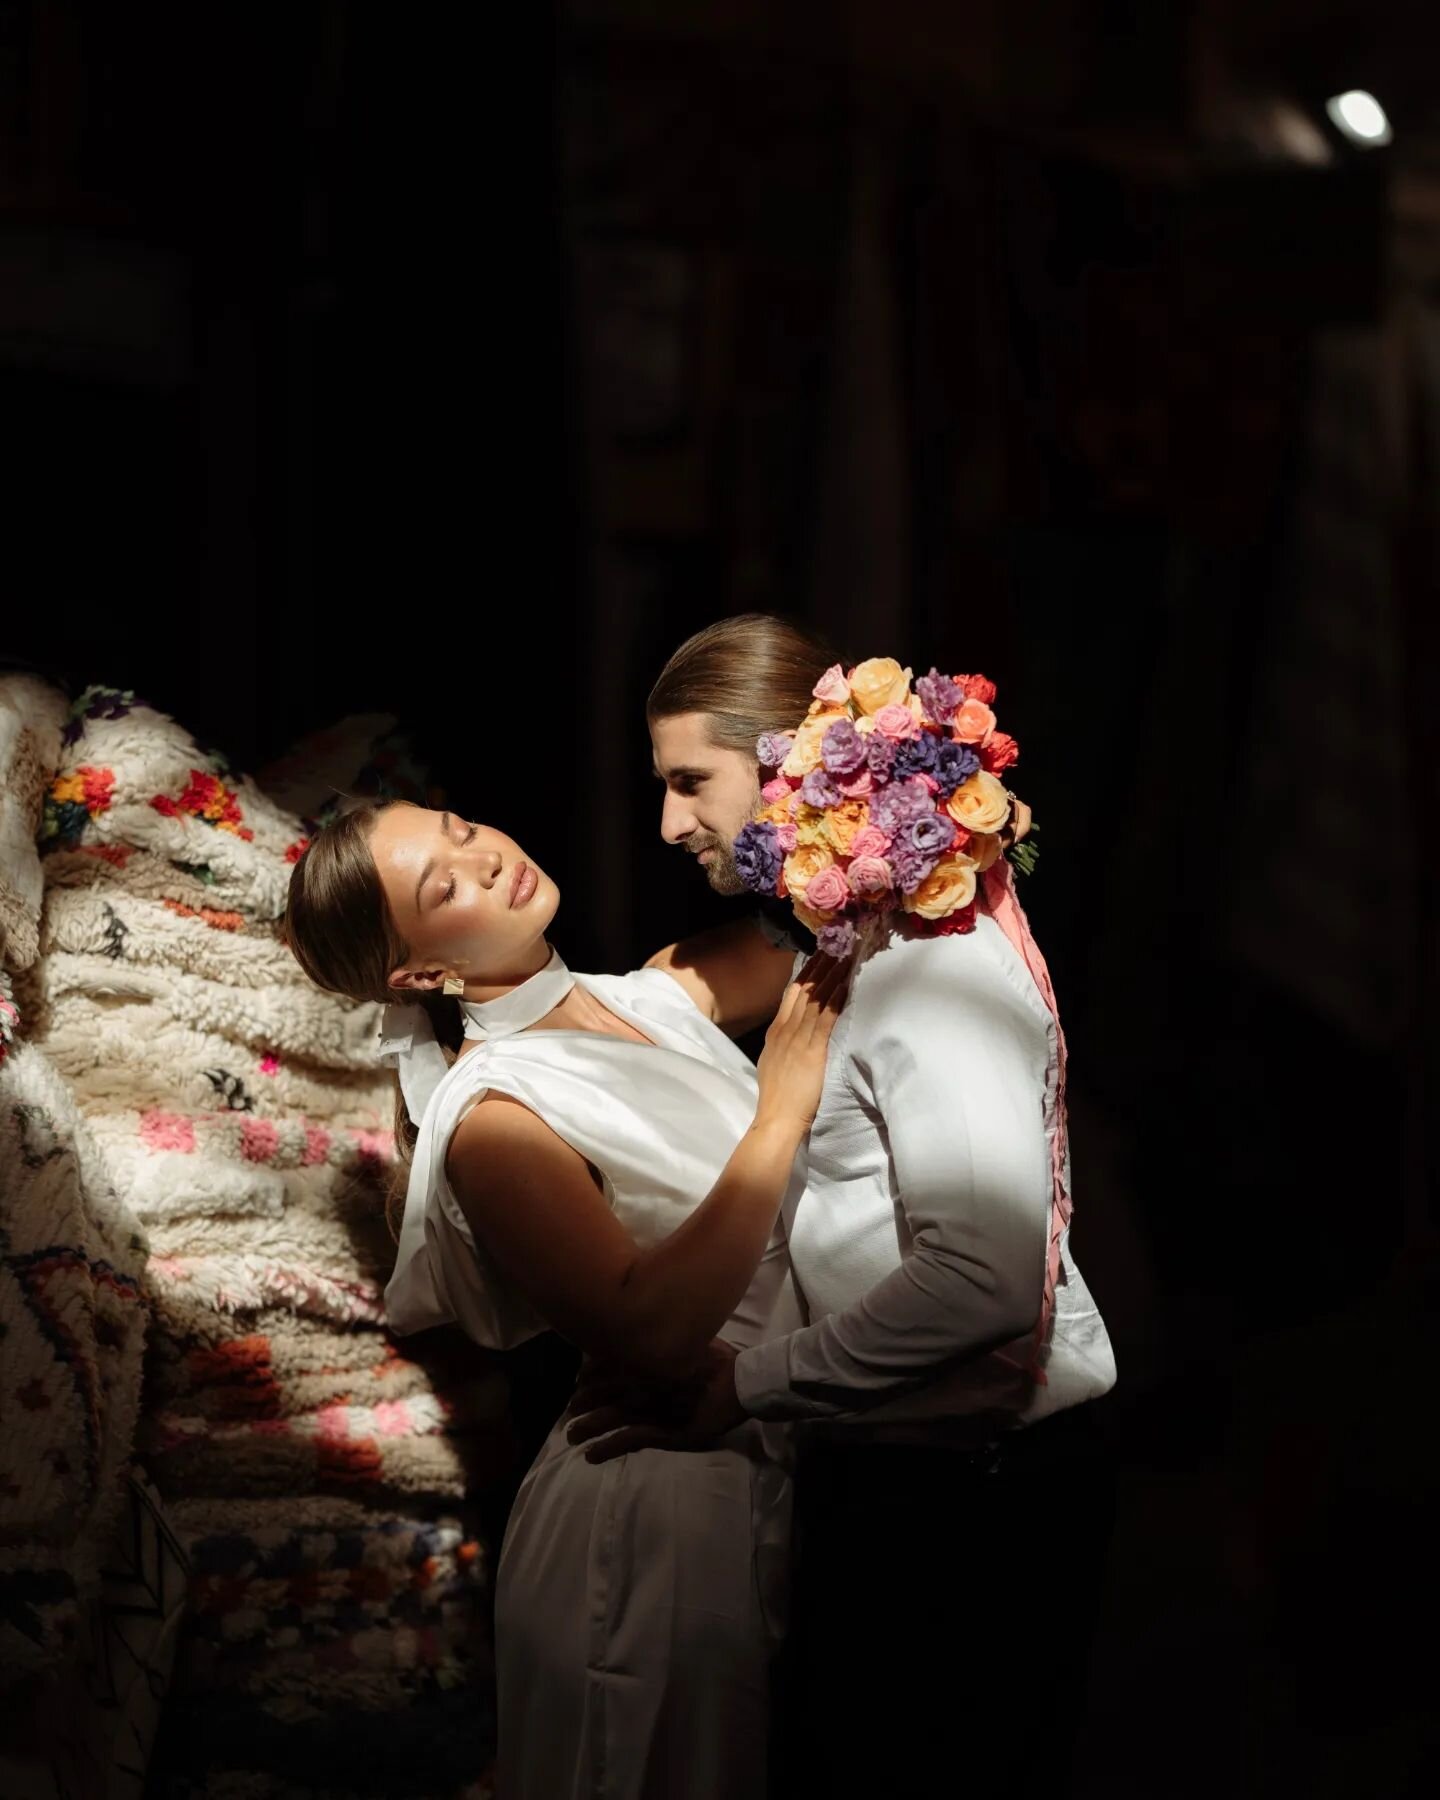 Ahh the light just hits differently in Marrakech 🤤

#elopementphotographermarrakech #marrakechelopement
#visitmarrakech

MUA: Carlie - @makeupbycarliex
Hair: Natalie - @talie_danielle
Models: Eloise and Tom - @the_maroskes
Floral design: Elizabeth -